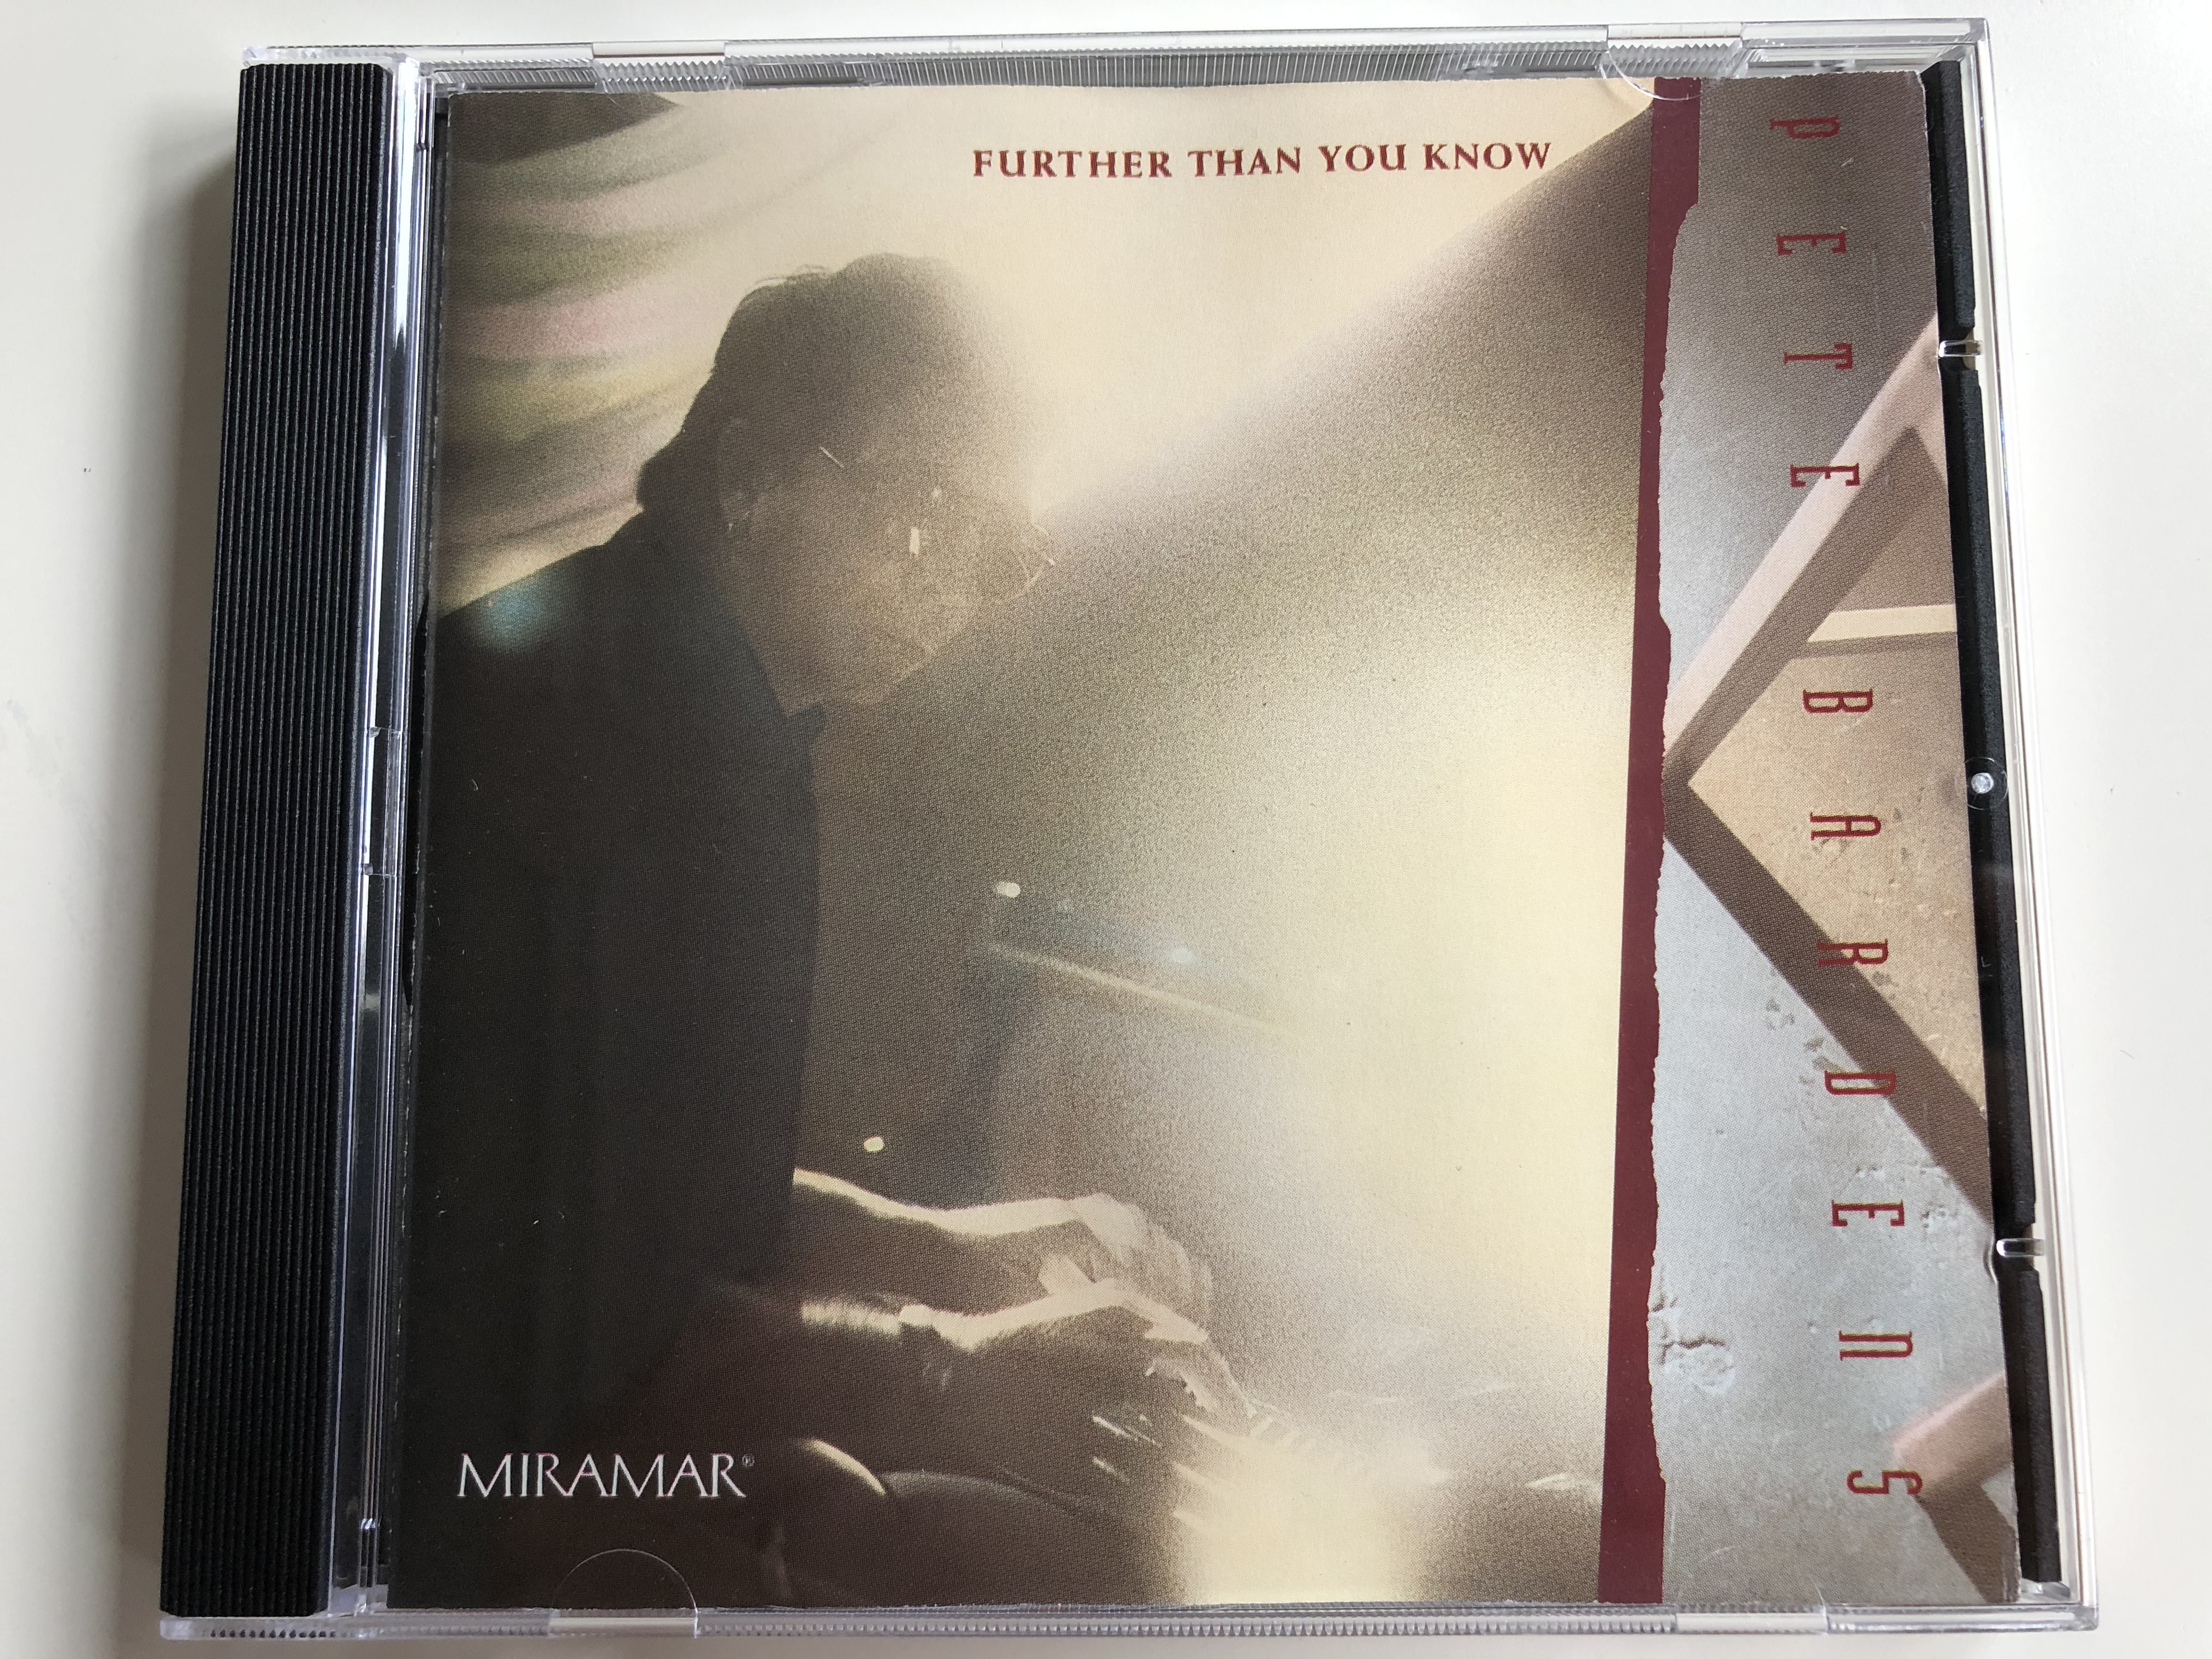 pete-bardens-further-than-you-know-miramar-audio-cd-1993-mpcd-2601-1-.jpg